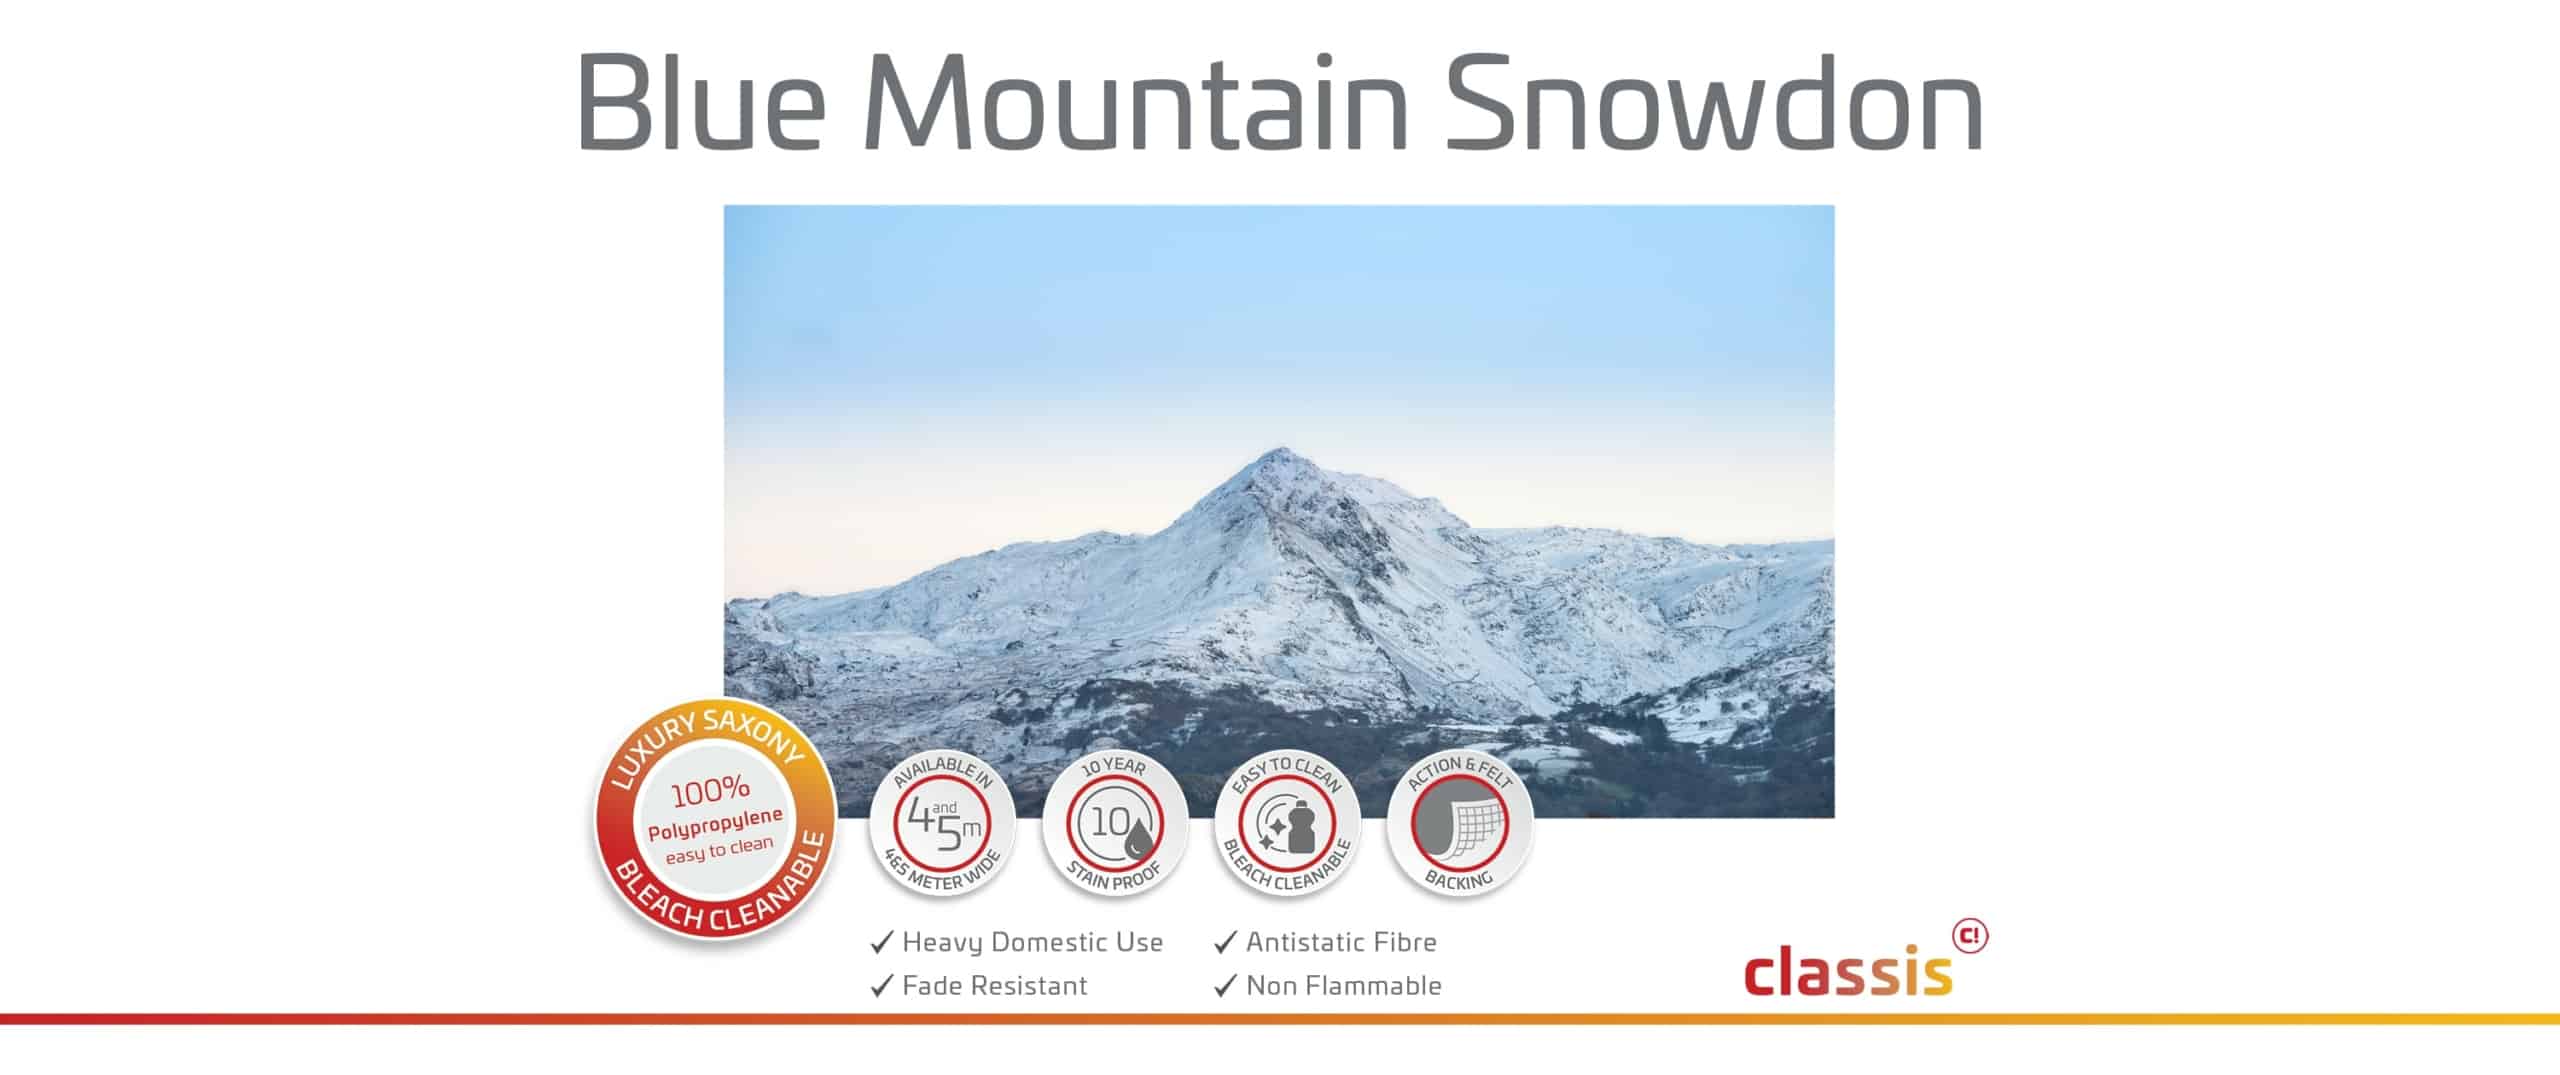 Blue Mountain Snowdon Website 3000x1260px